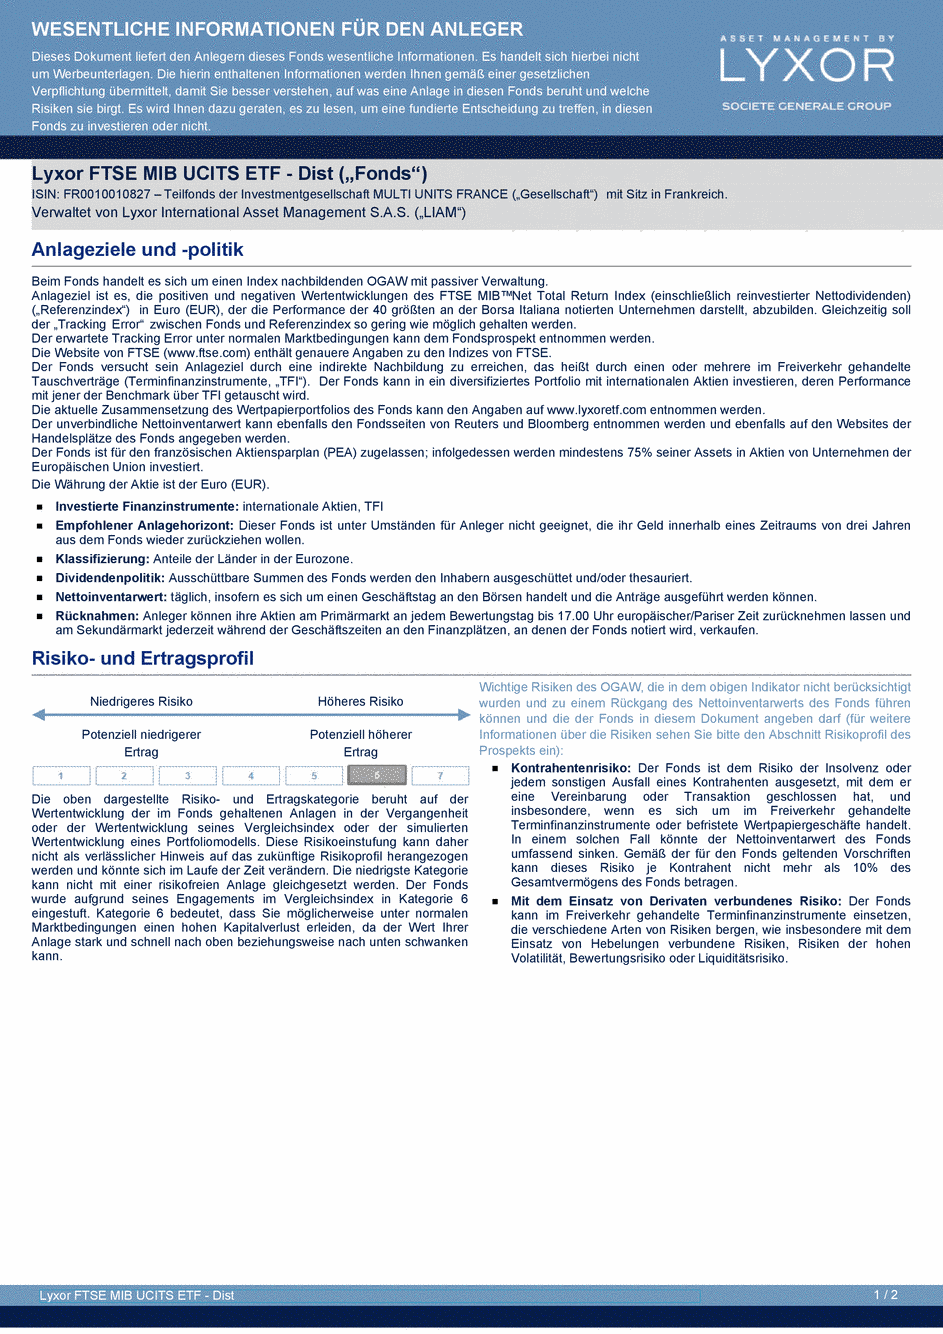 DICI Lyxor FTSE MIB UCITS ETF - Dist - 19/02/2021 - Allemand